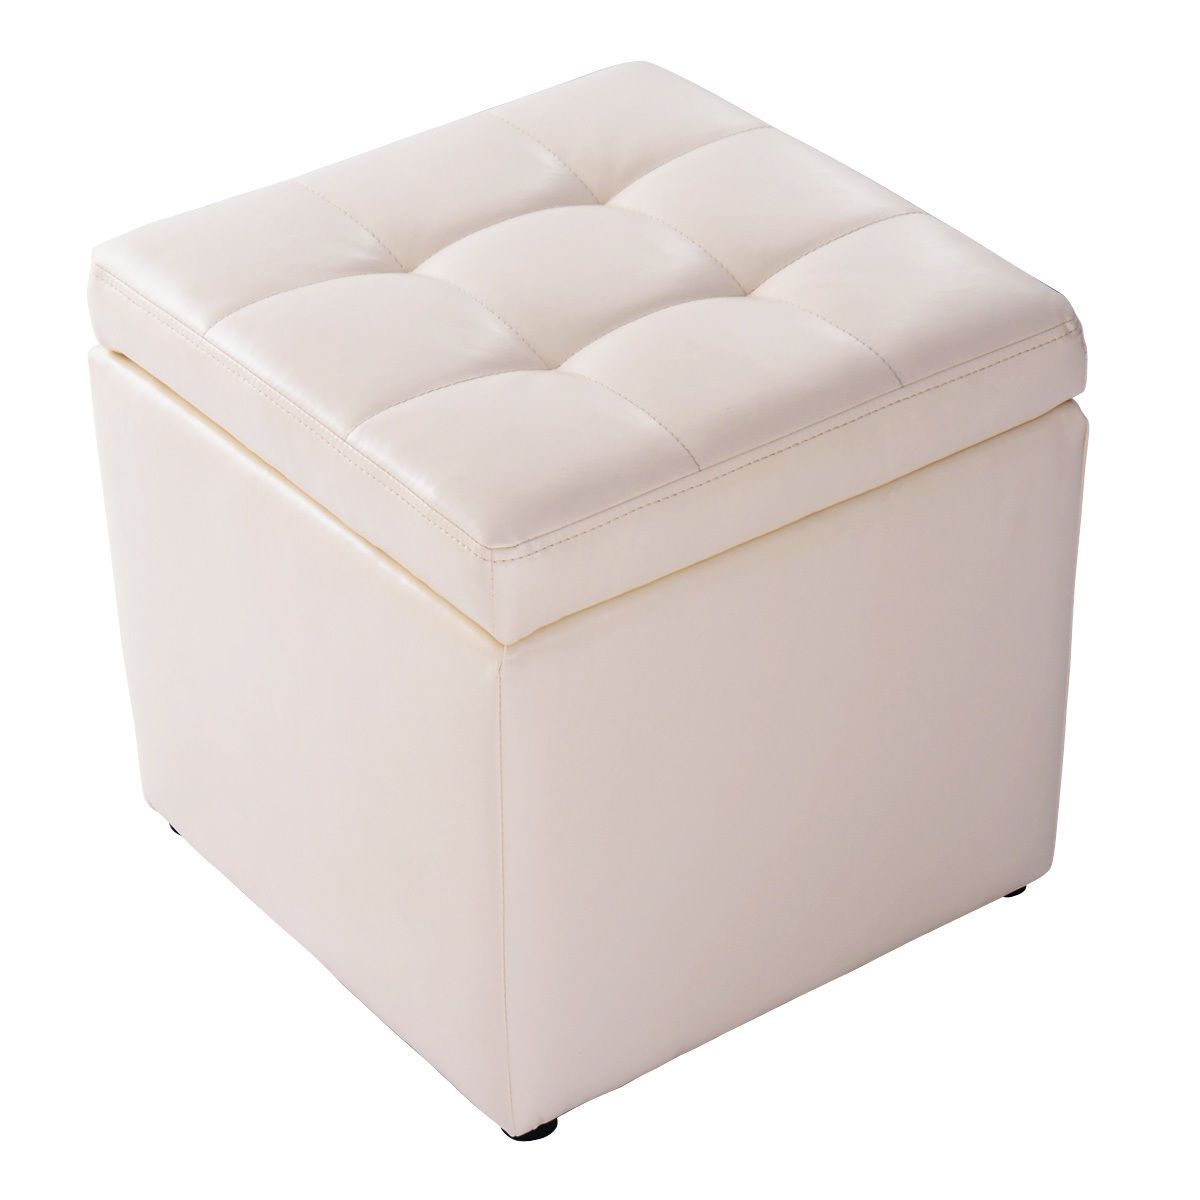 High Quality PU Leather Cube Ottoman Storage Seat - White